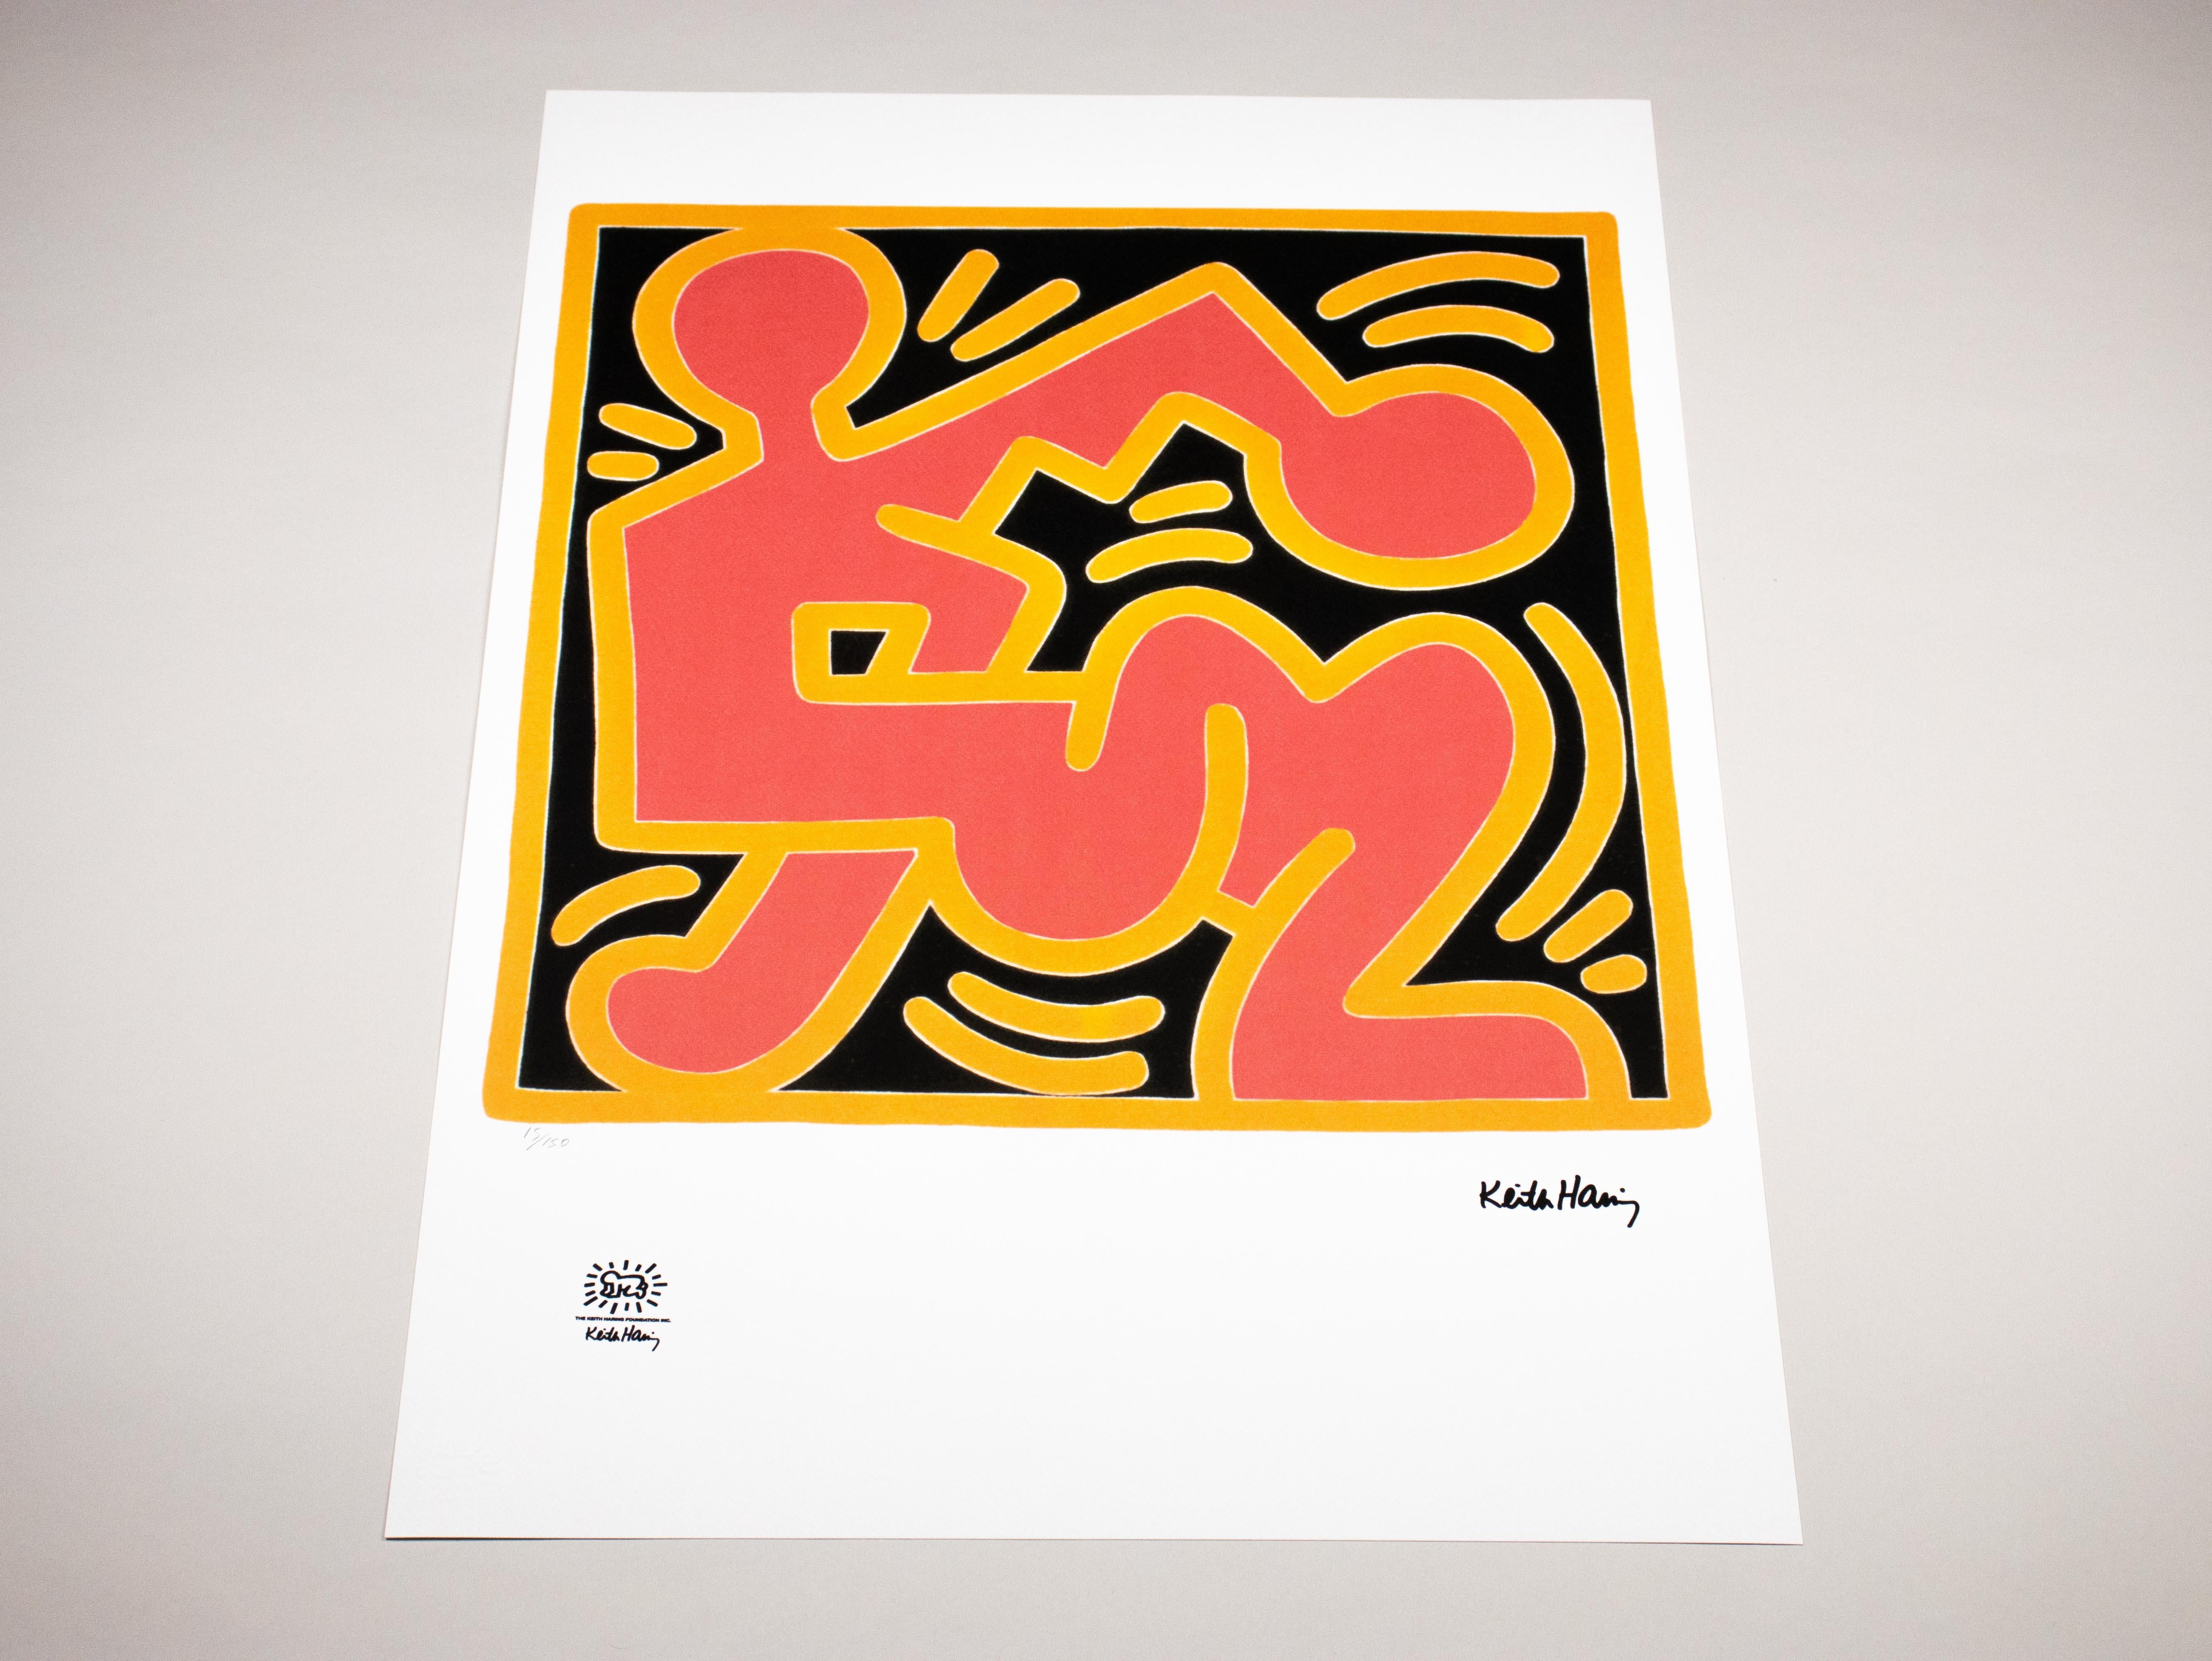 Lithographie – limitierte Auflage 15/150 Exemplare – Keith Haring Foundation Inc. im Angebot 6